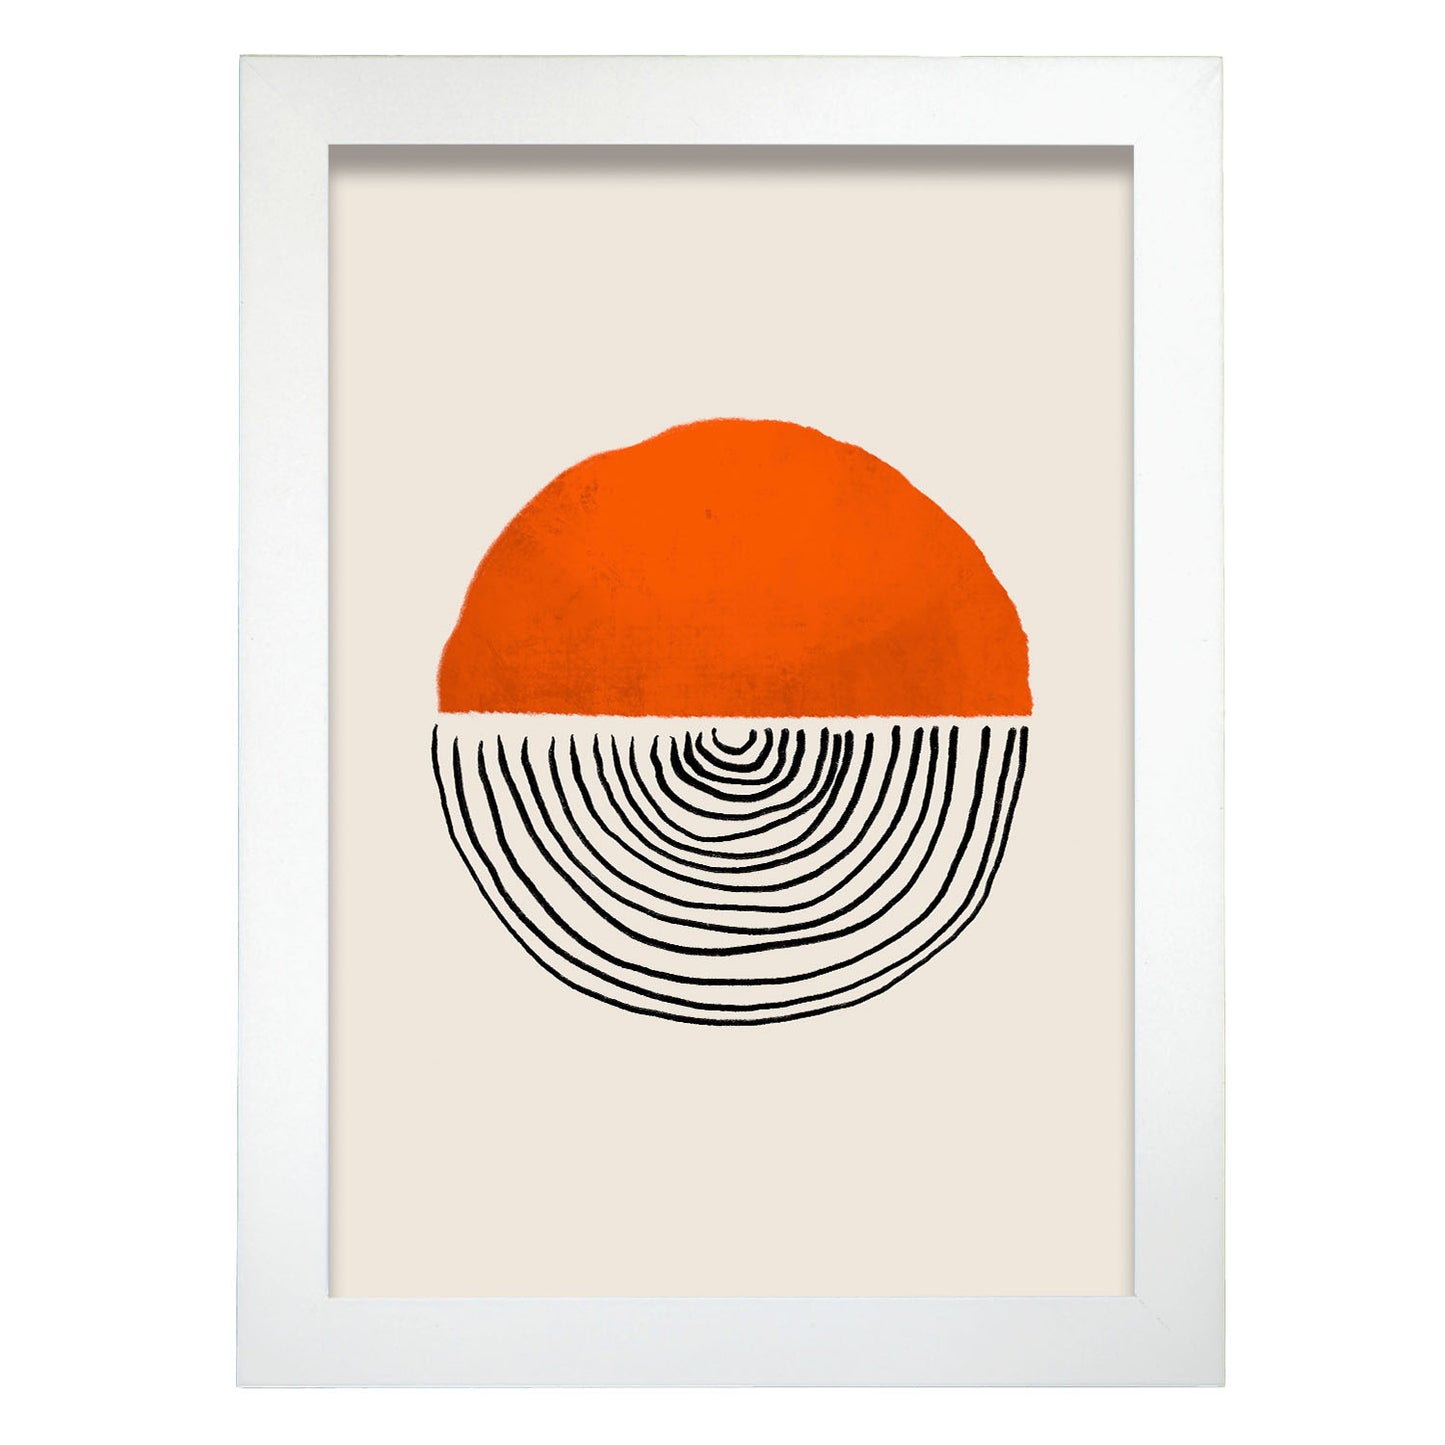 Lamina Nacnic Diseño de Esfera Naranja